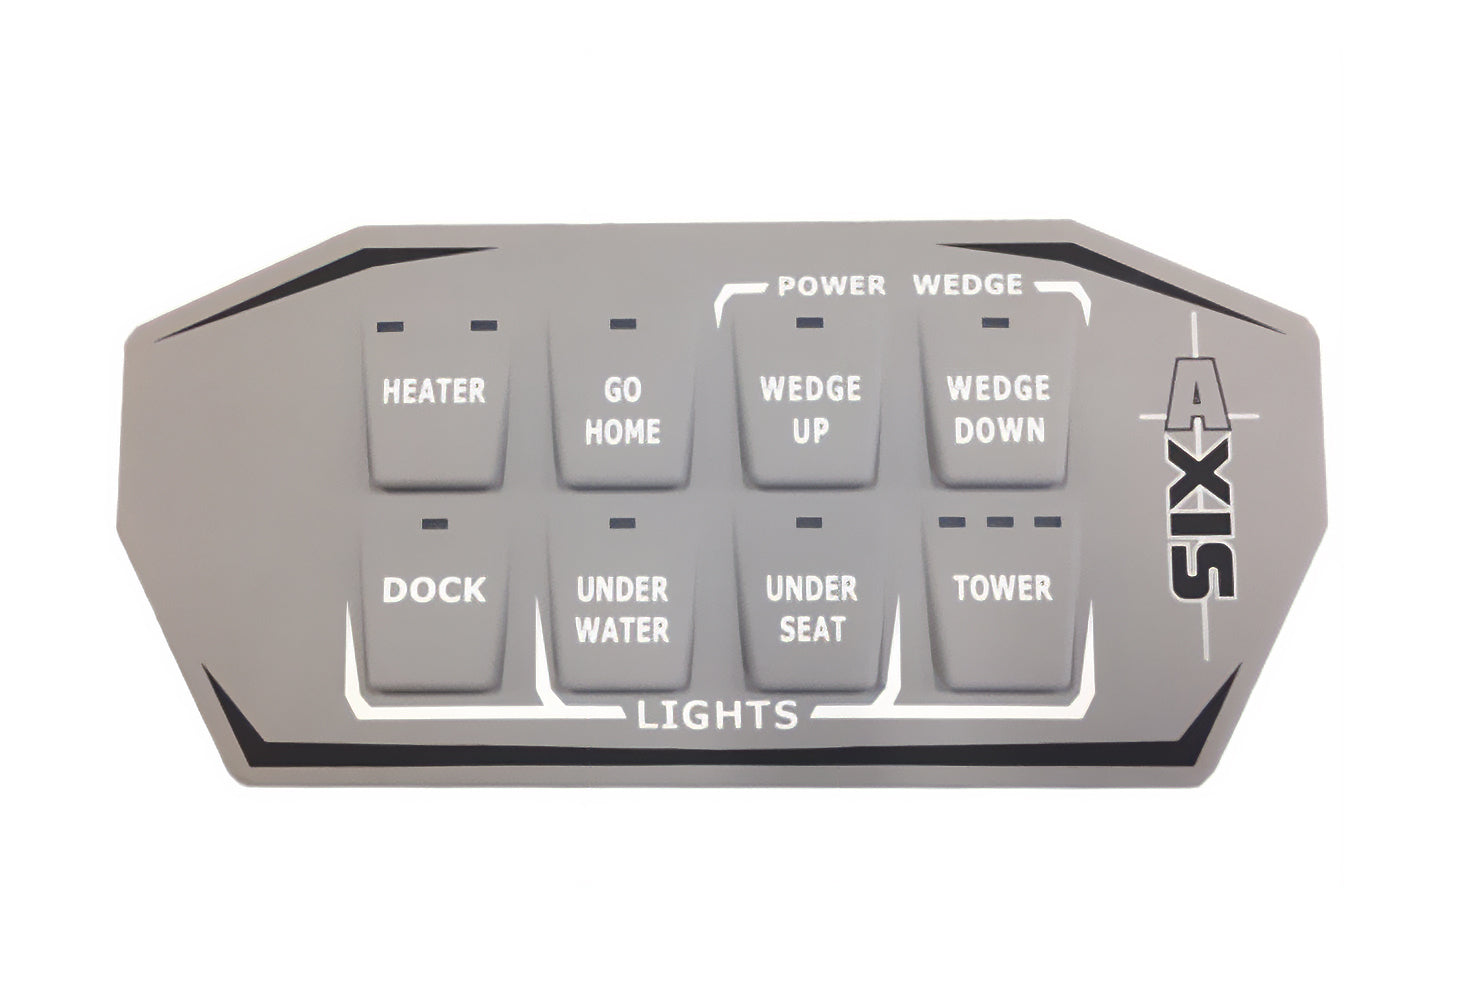 Axis Keypad w/ Power Wedge Control